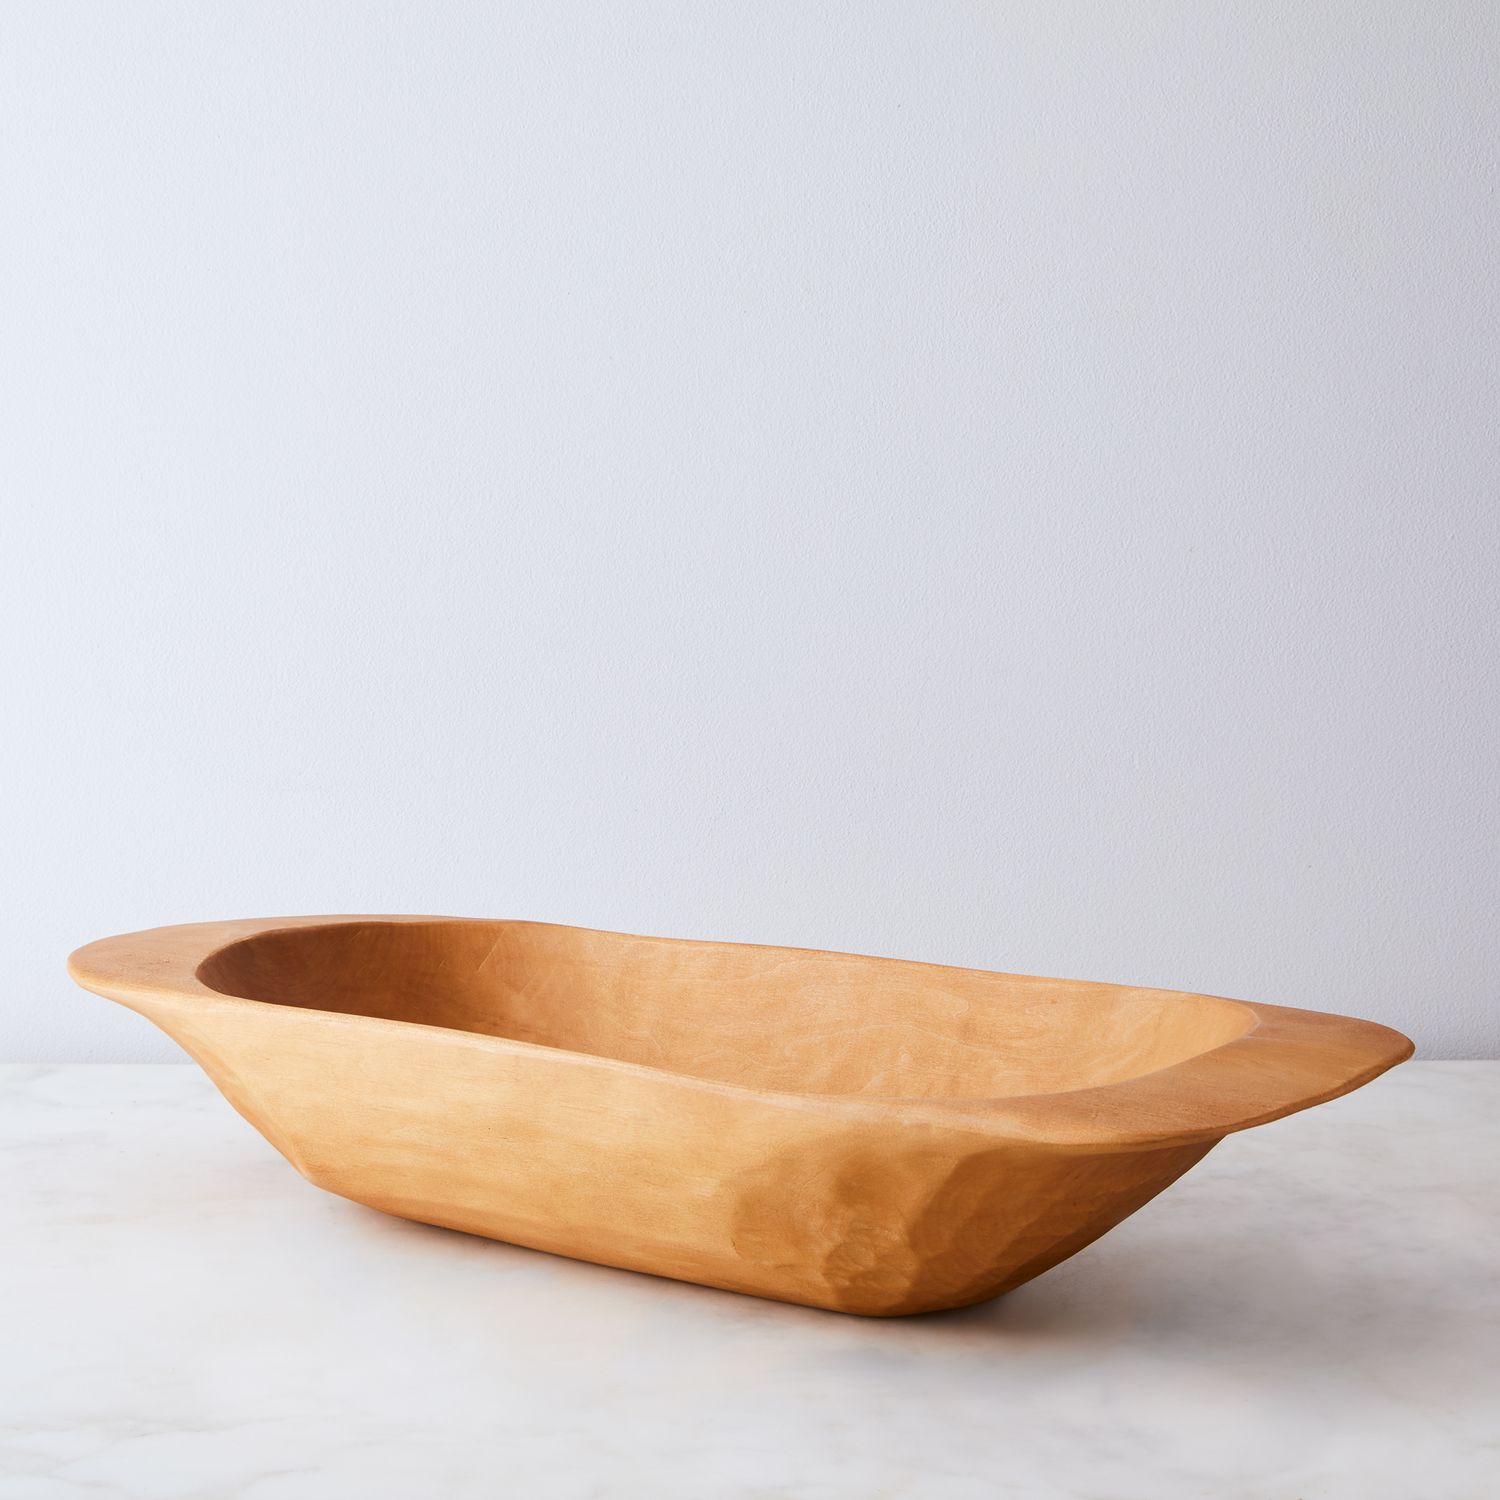 Reclaimed Wood Bread Bowl, Wooden Bread Bowls